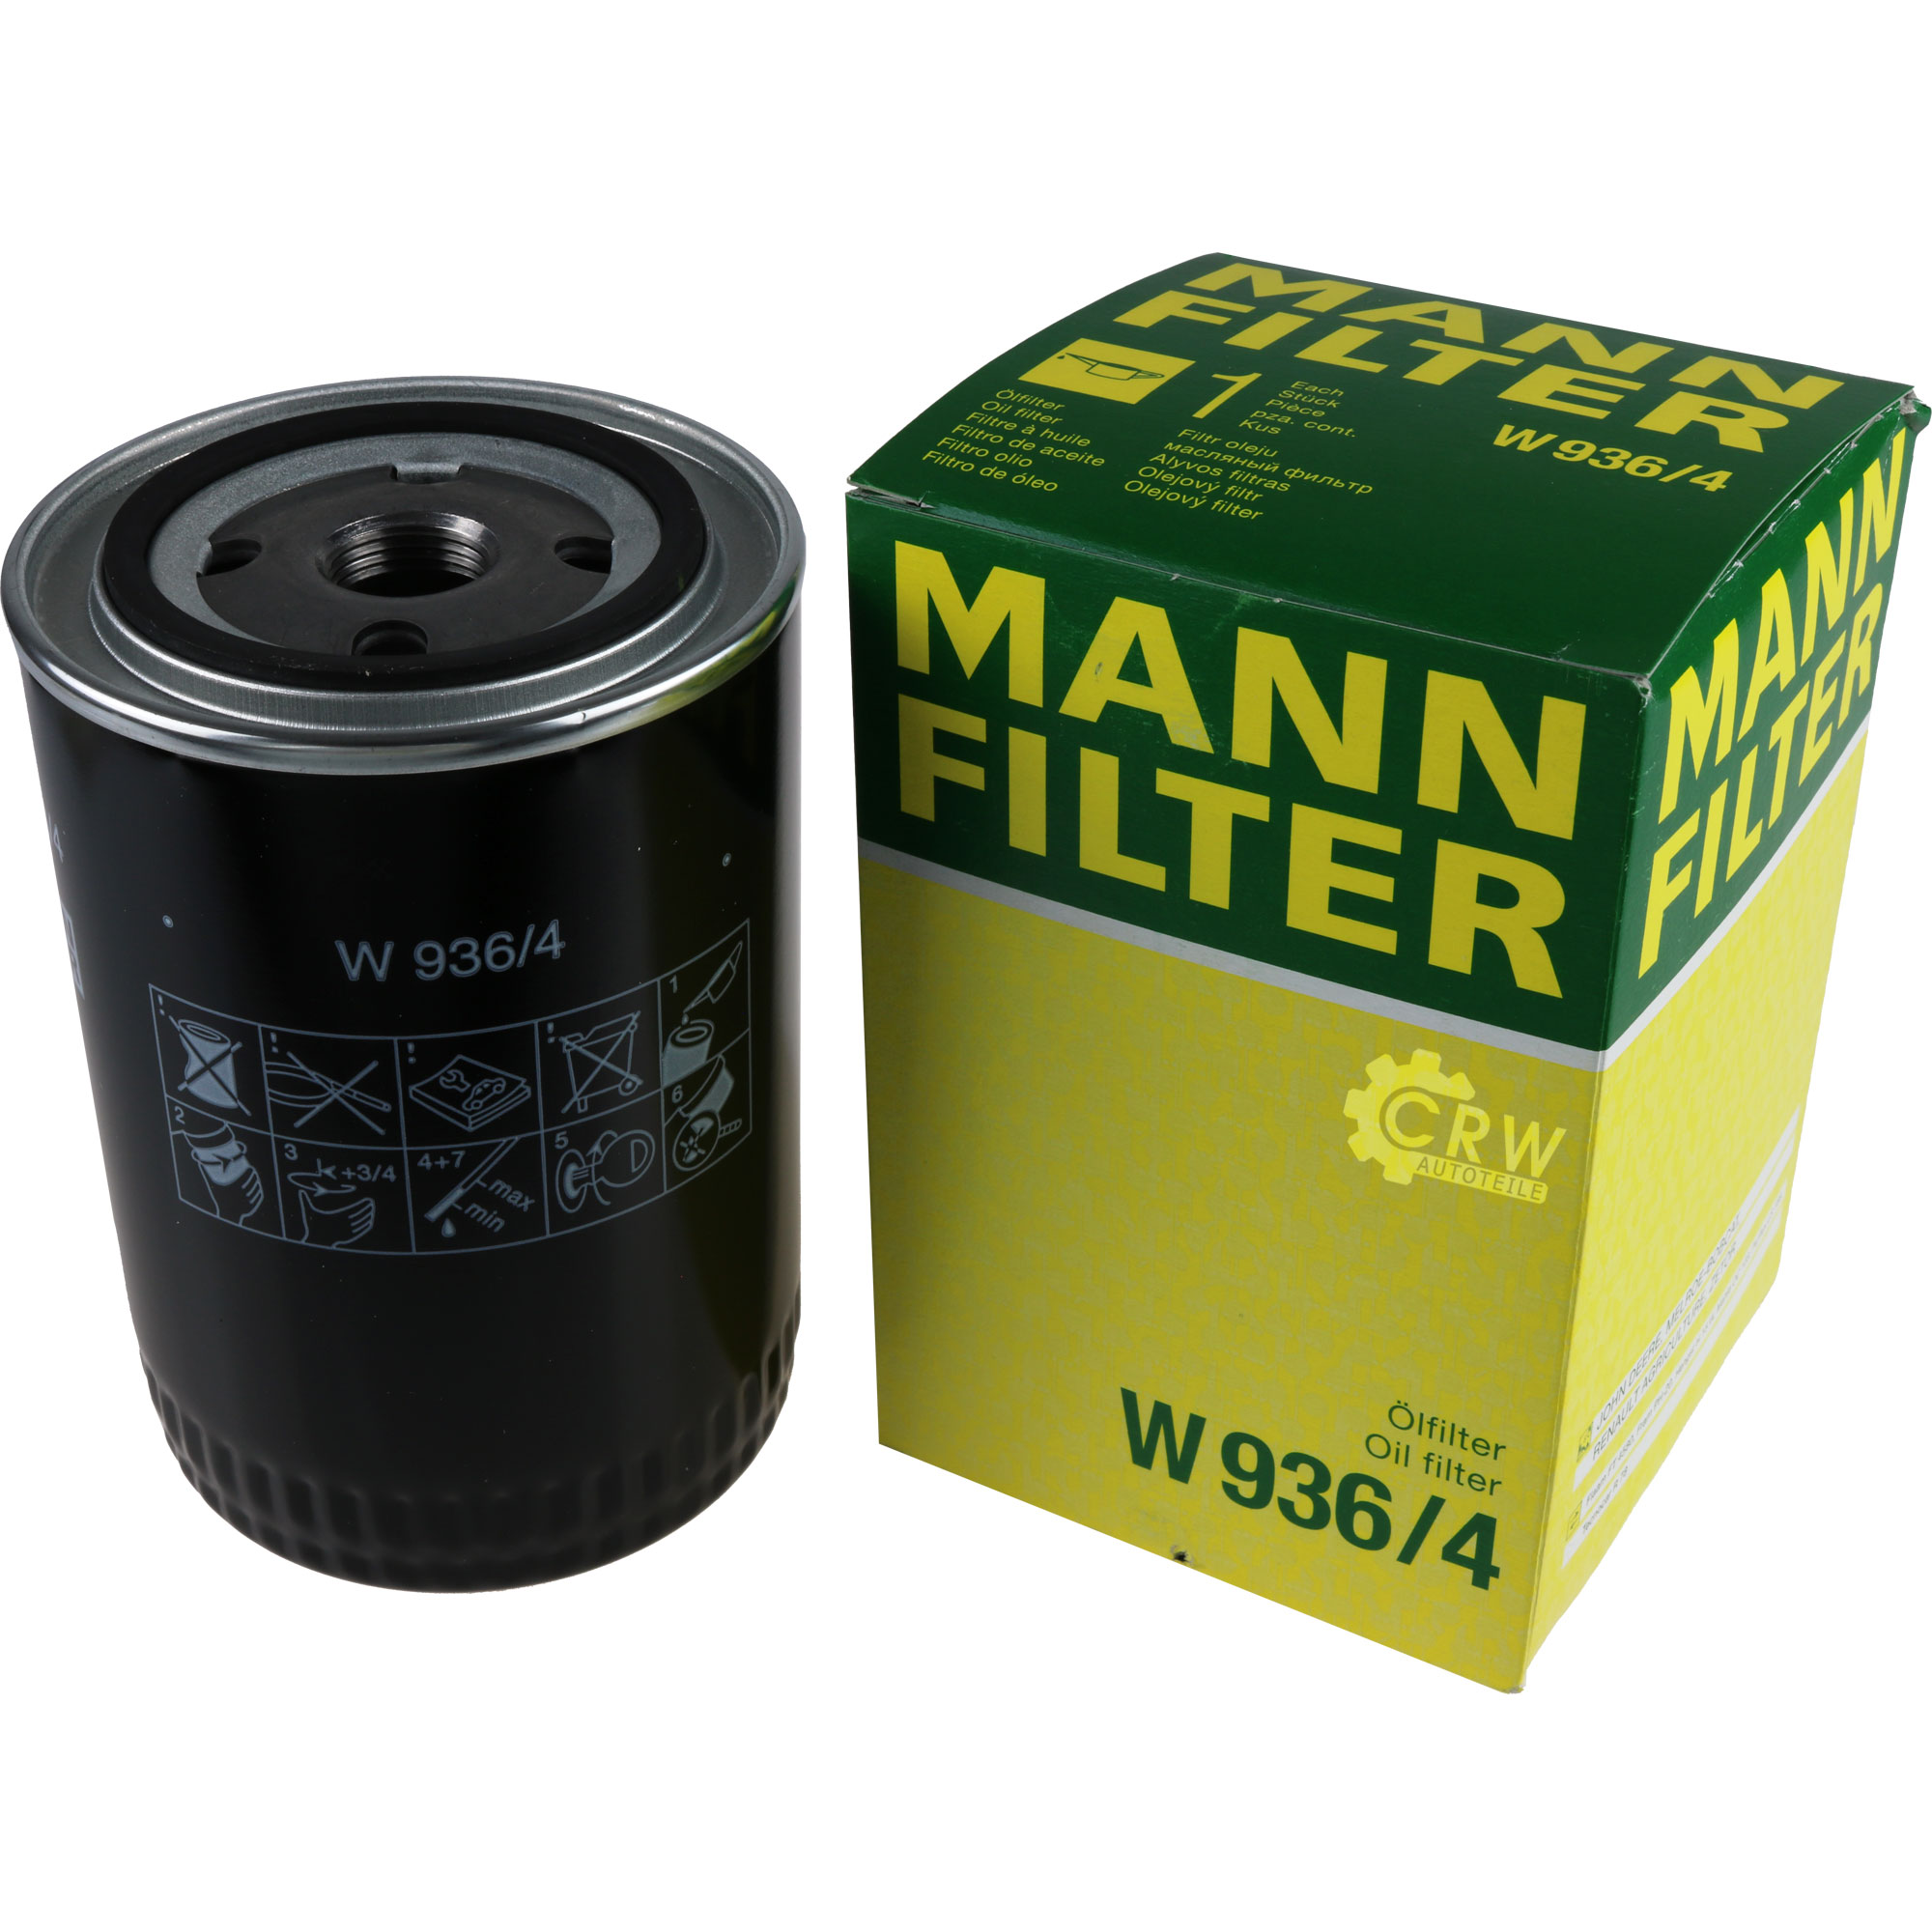 MANN-FILTER Ölfilter Oelfilter W 936/4 Oil Filter